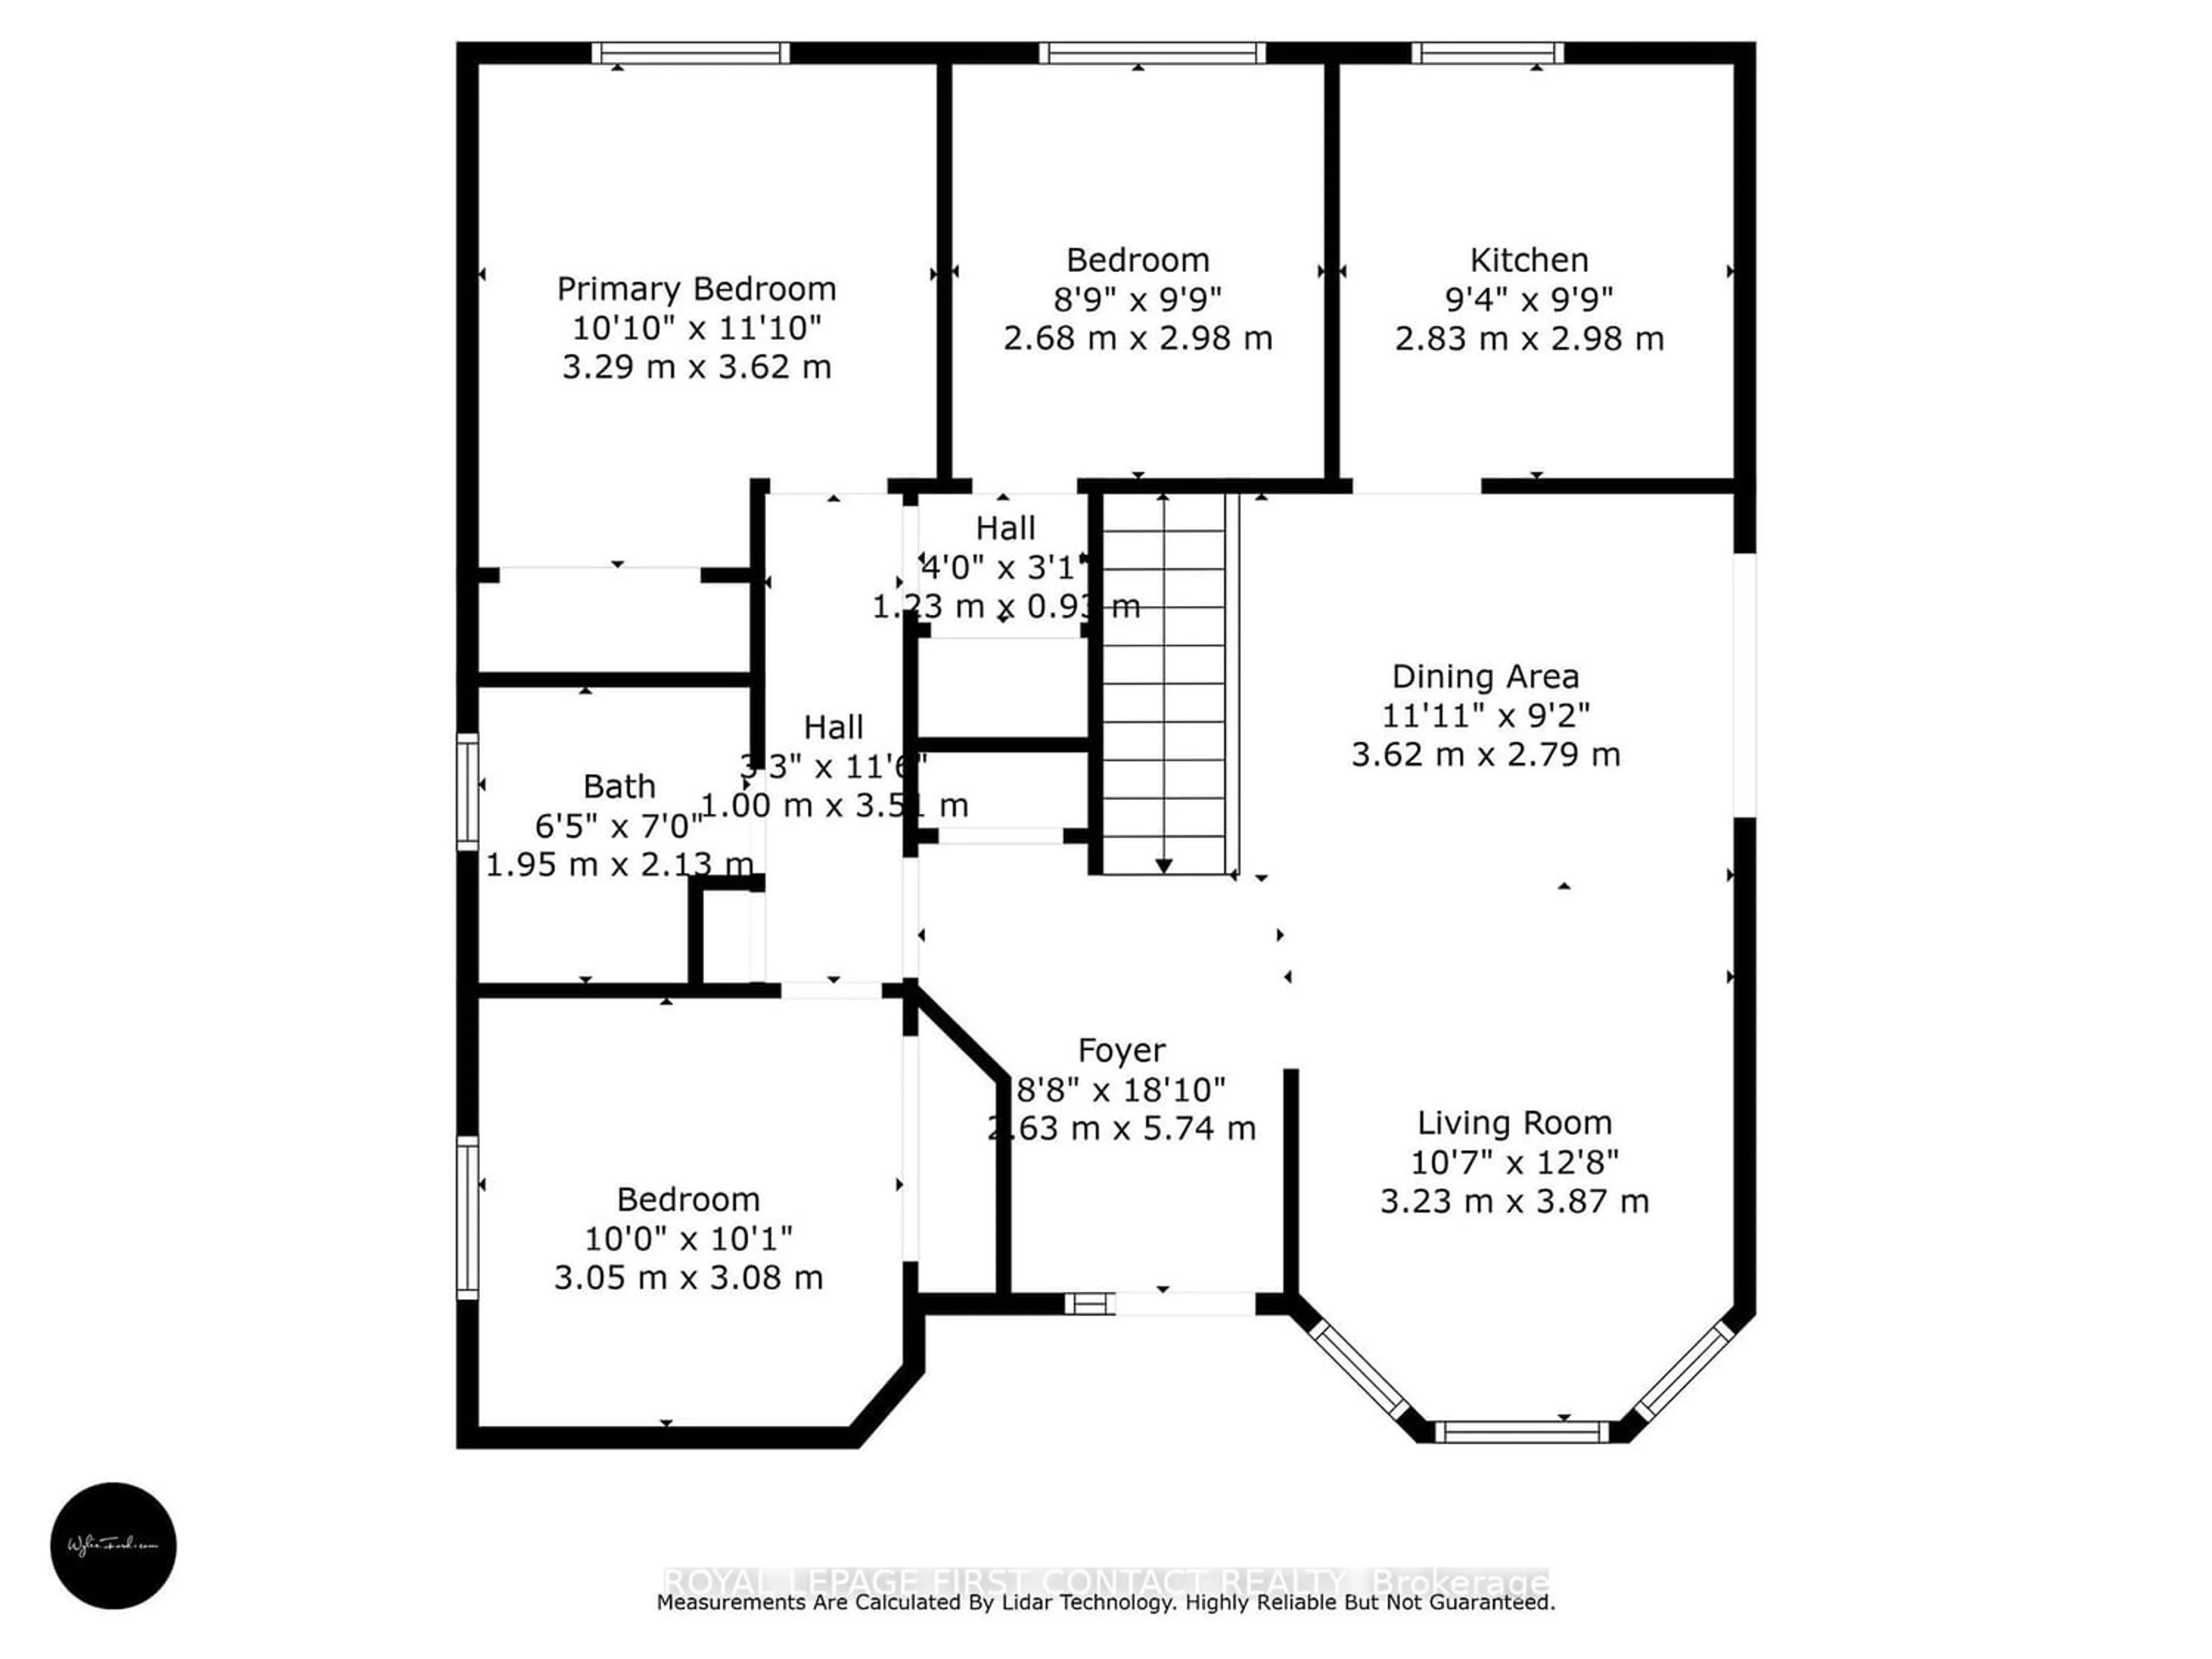 Floor plan for 49 Wallwins Way, Barrie Ontario L4N 8M2